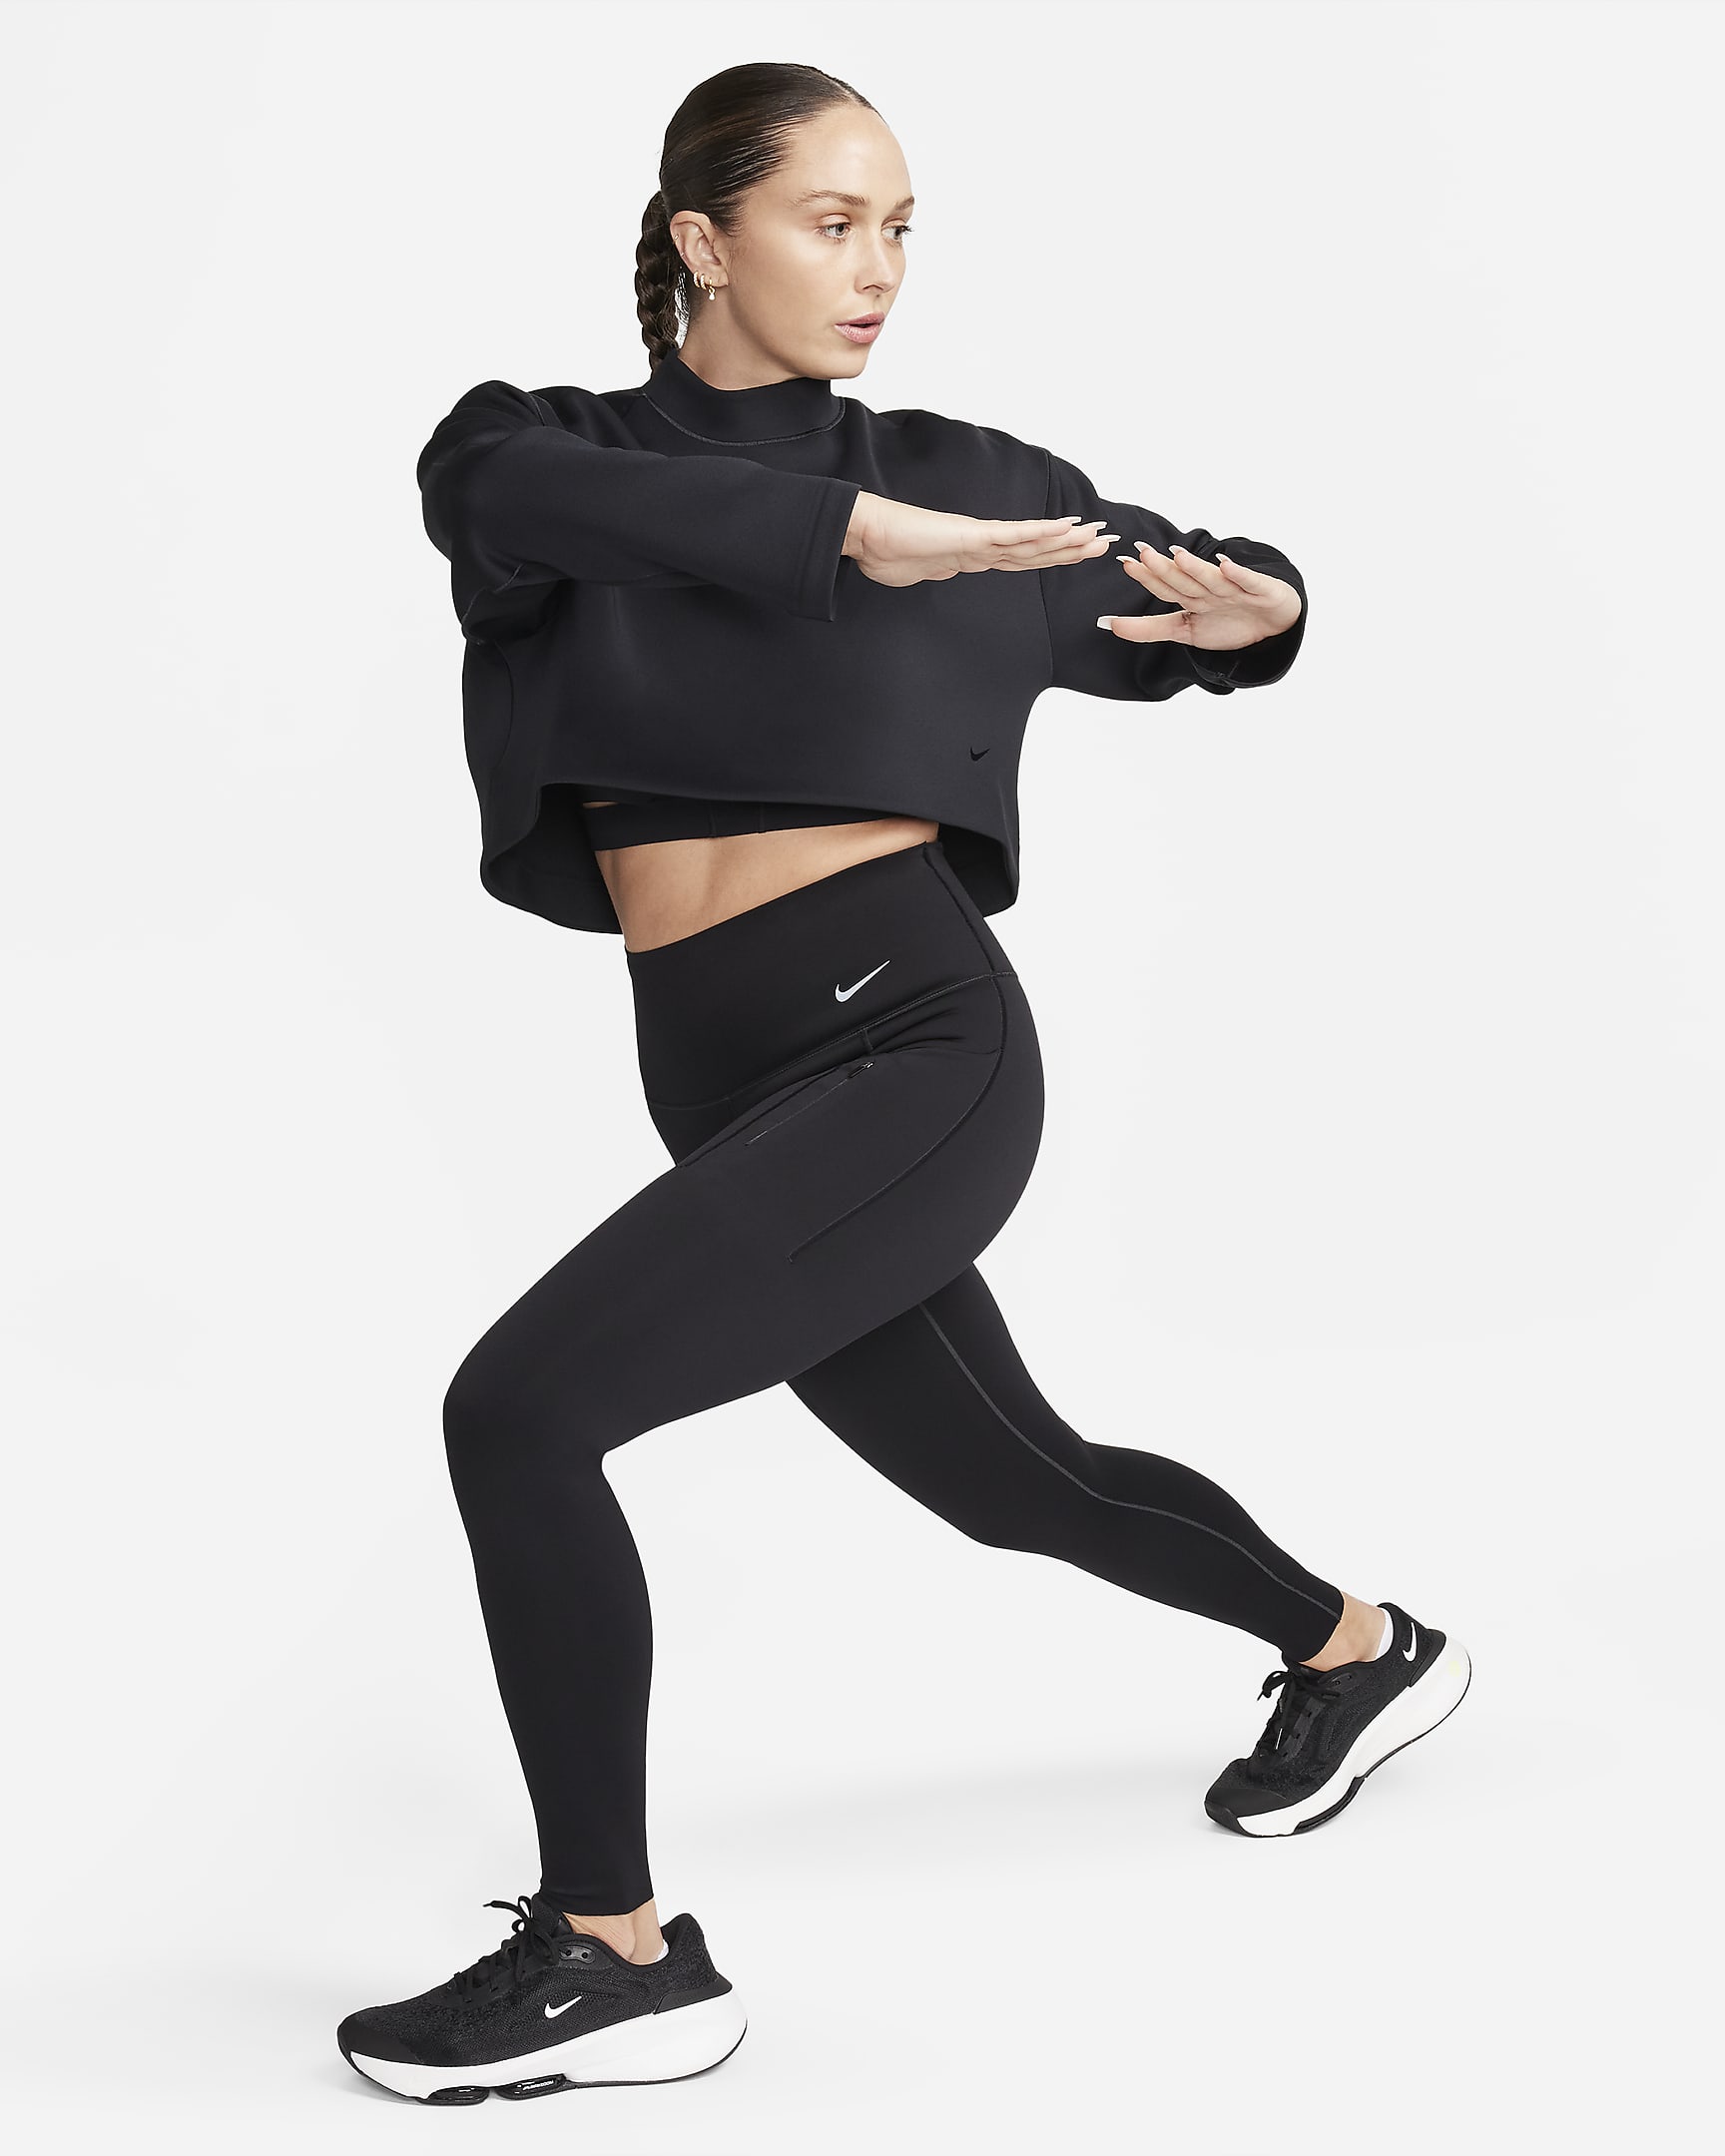 Nike Prima FutureMove Women's Dri-FIT Oversized Top. Nike HR